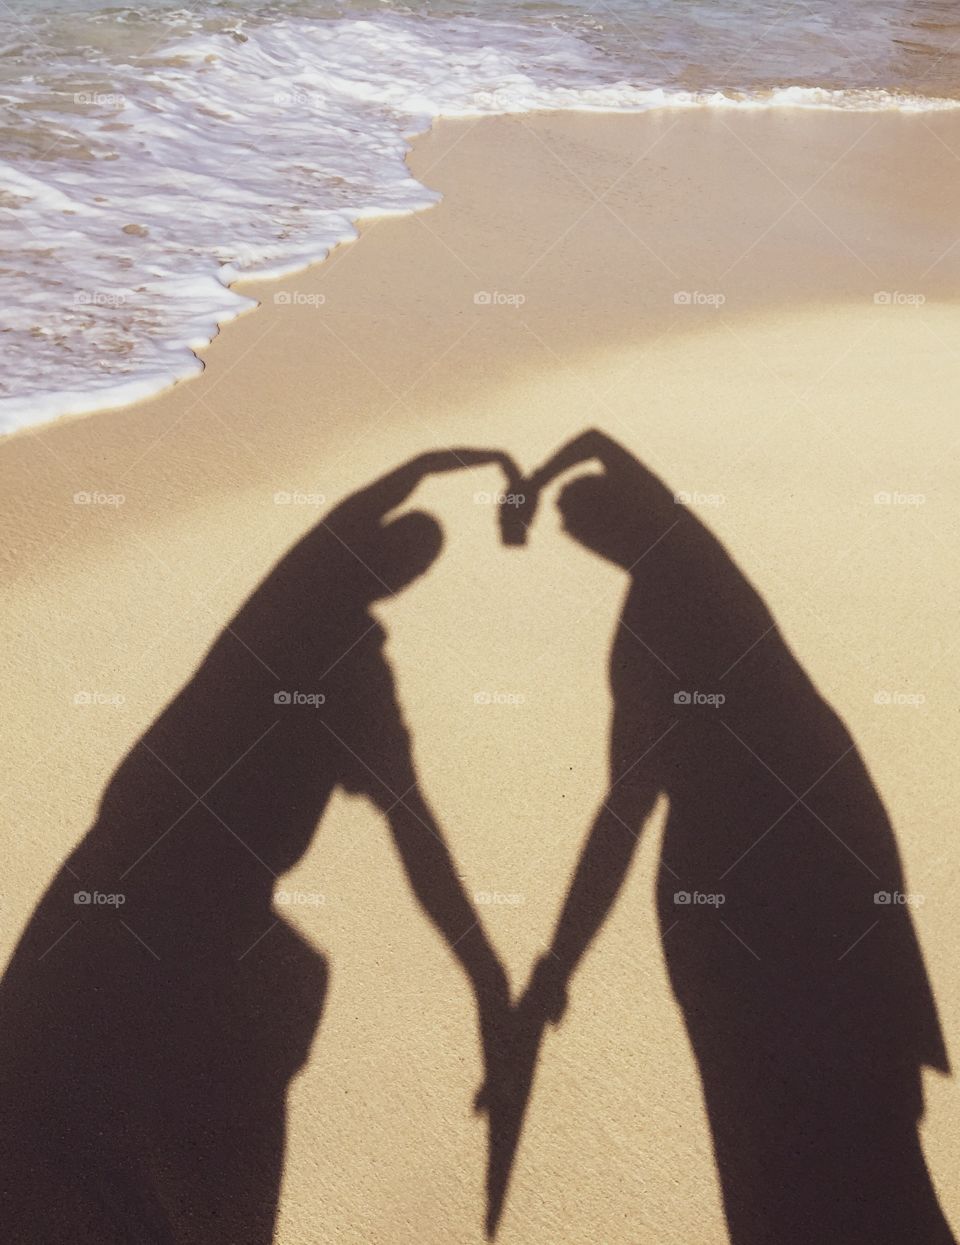 Shadow Of A Couple Making A Heart On The Beach Holding Hands, Creative Beach Photography, Island Beach Photo 